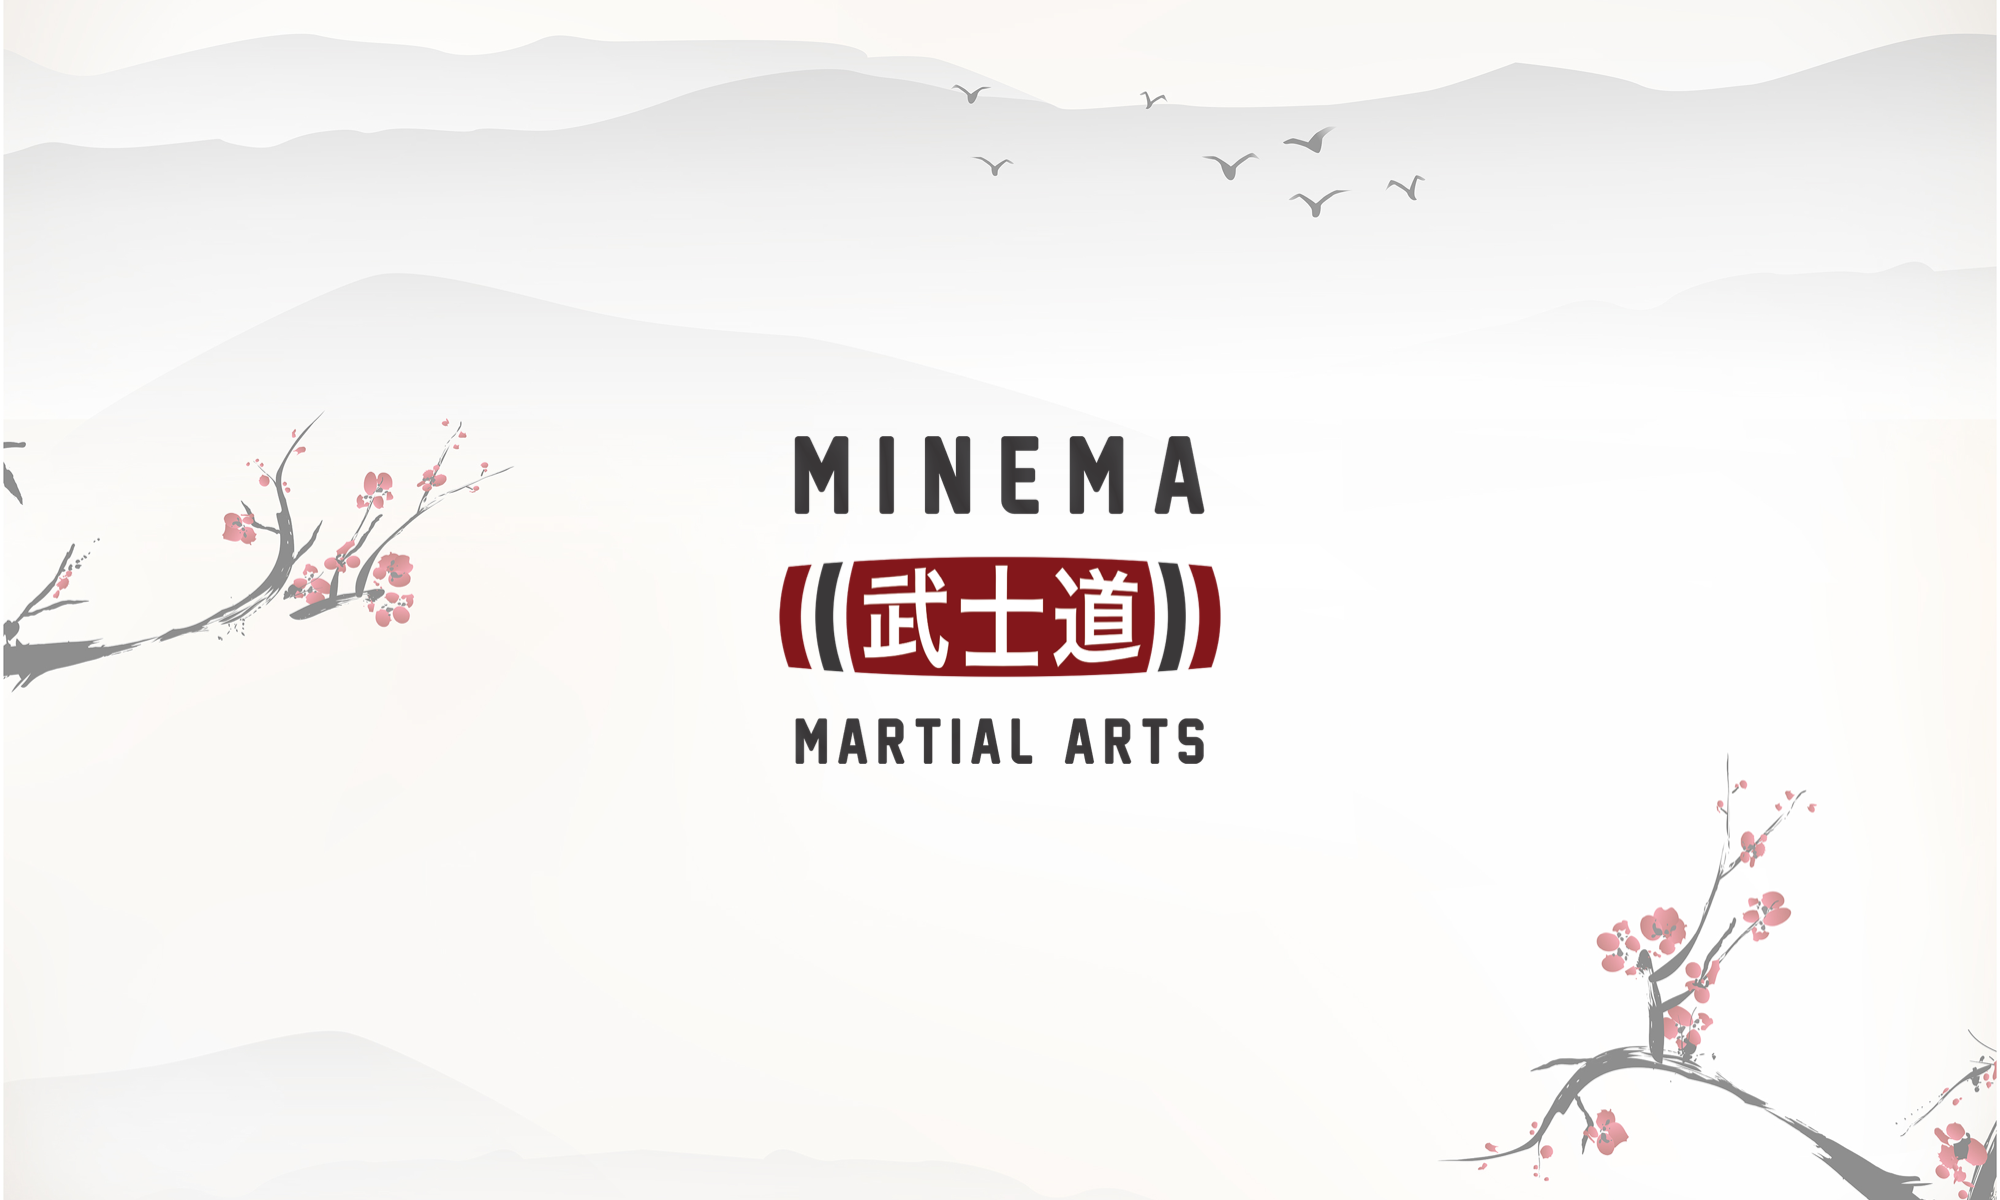 MINEMA Martial Arts